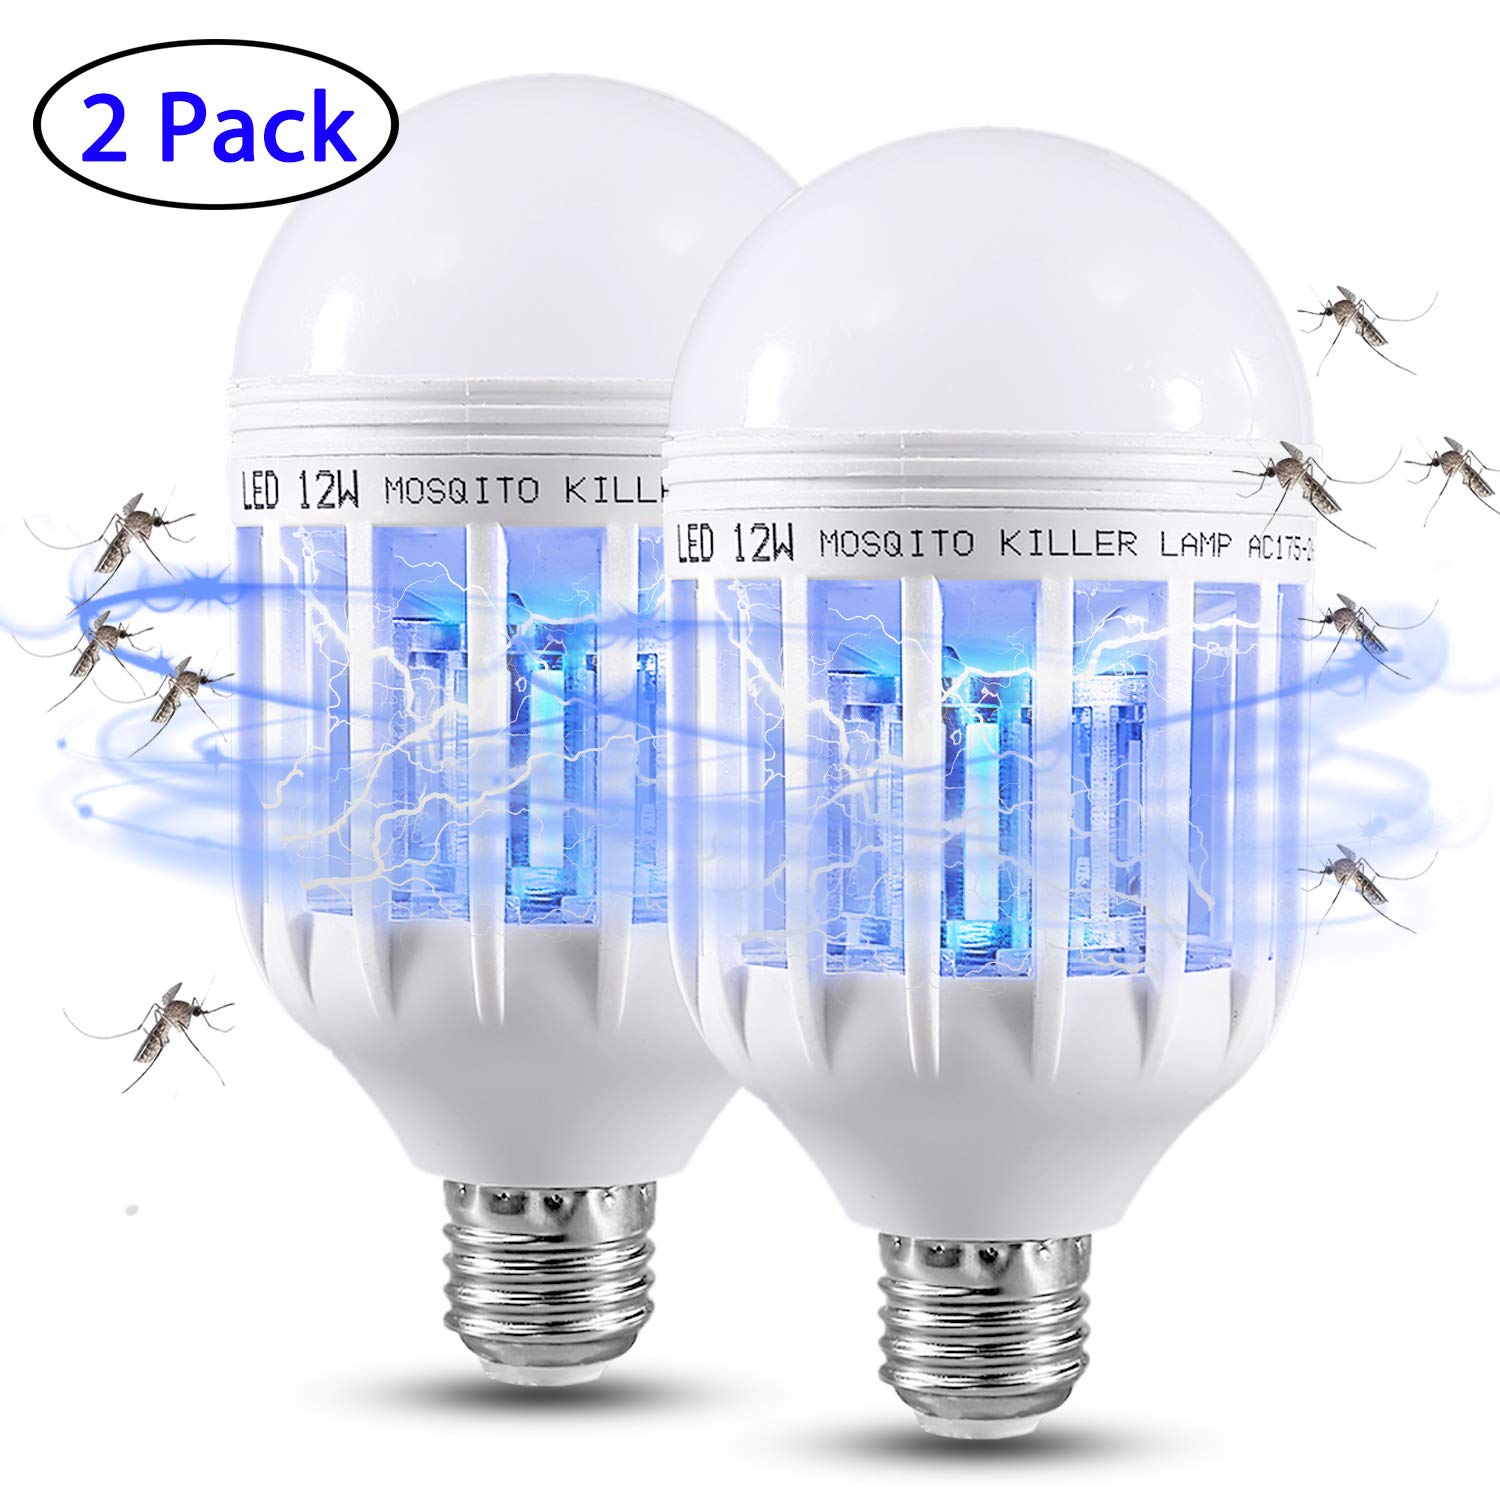 Mosquito Killer Lamp E27 Base Bug Zapper Light for Indoor Outdoor